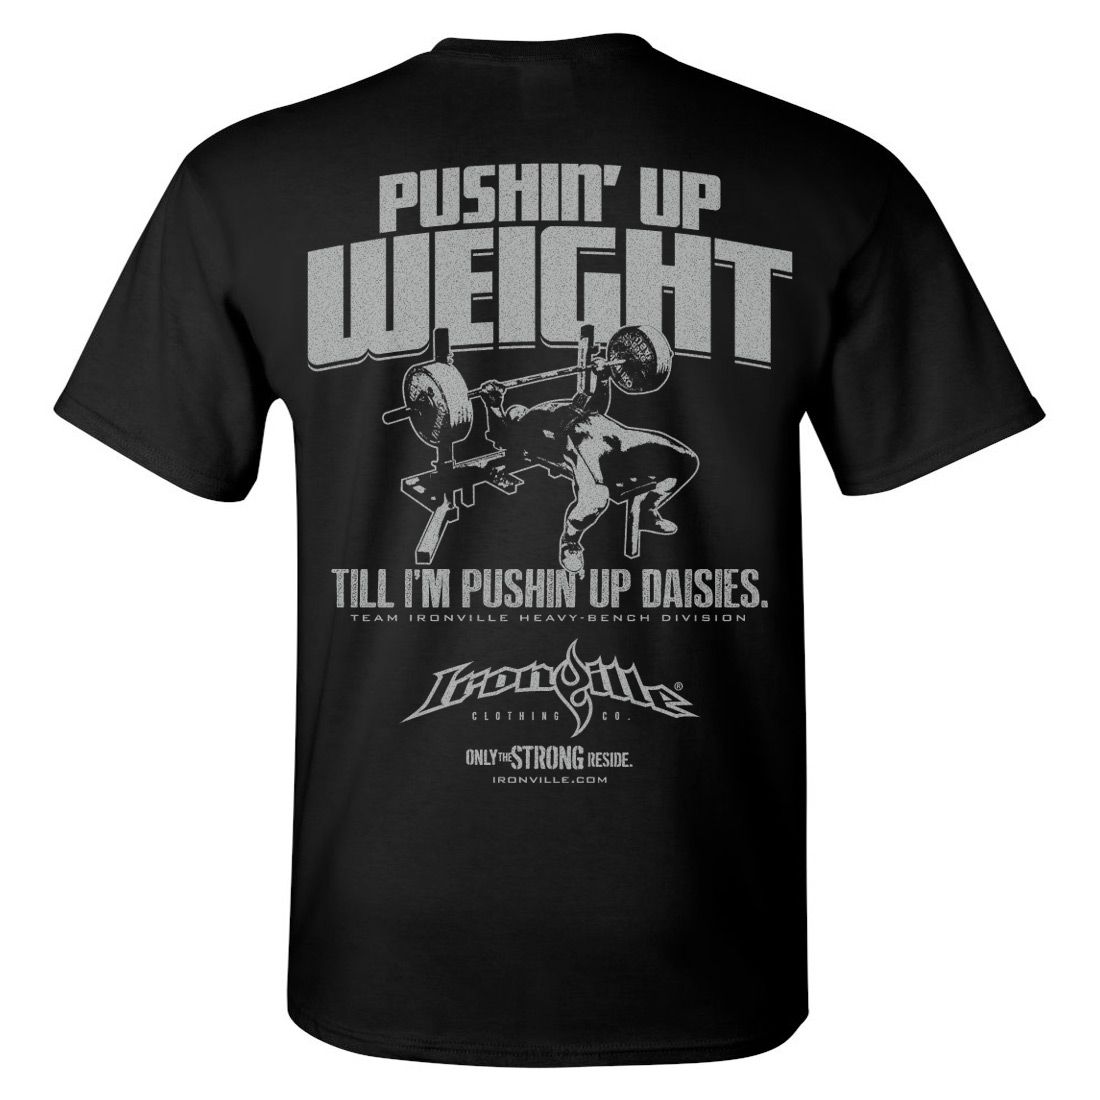 https://www.ironville.com/wp-content/uploads/2015/02/pushin-up-weight-till-im-pushin-up-daisies-bench-press-gym-t-shirt-black.jpg